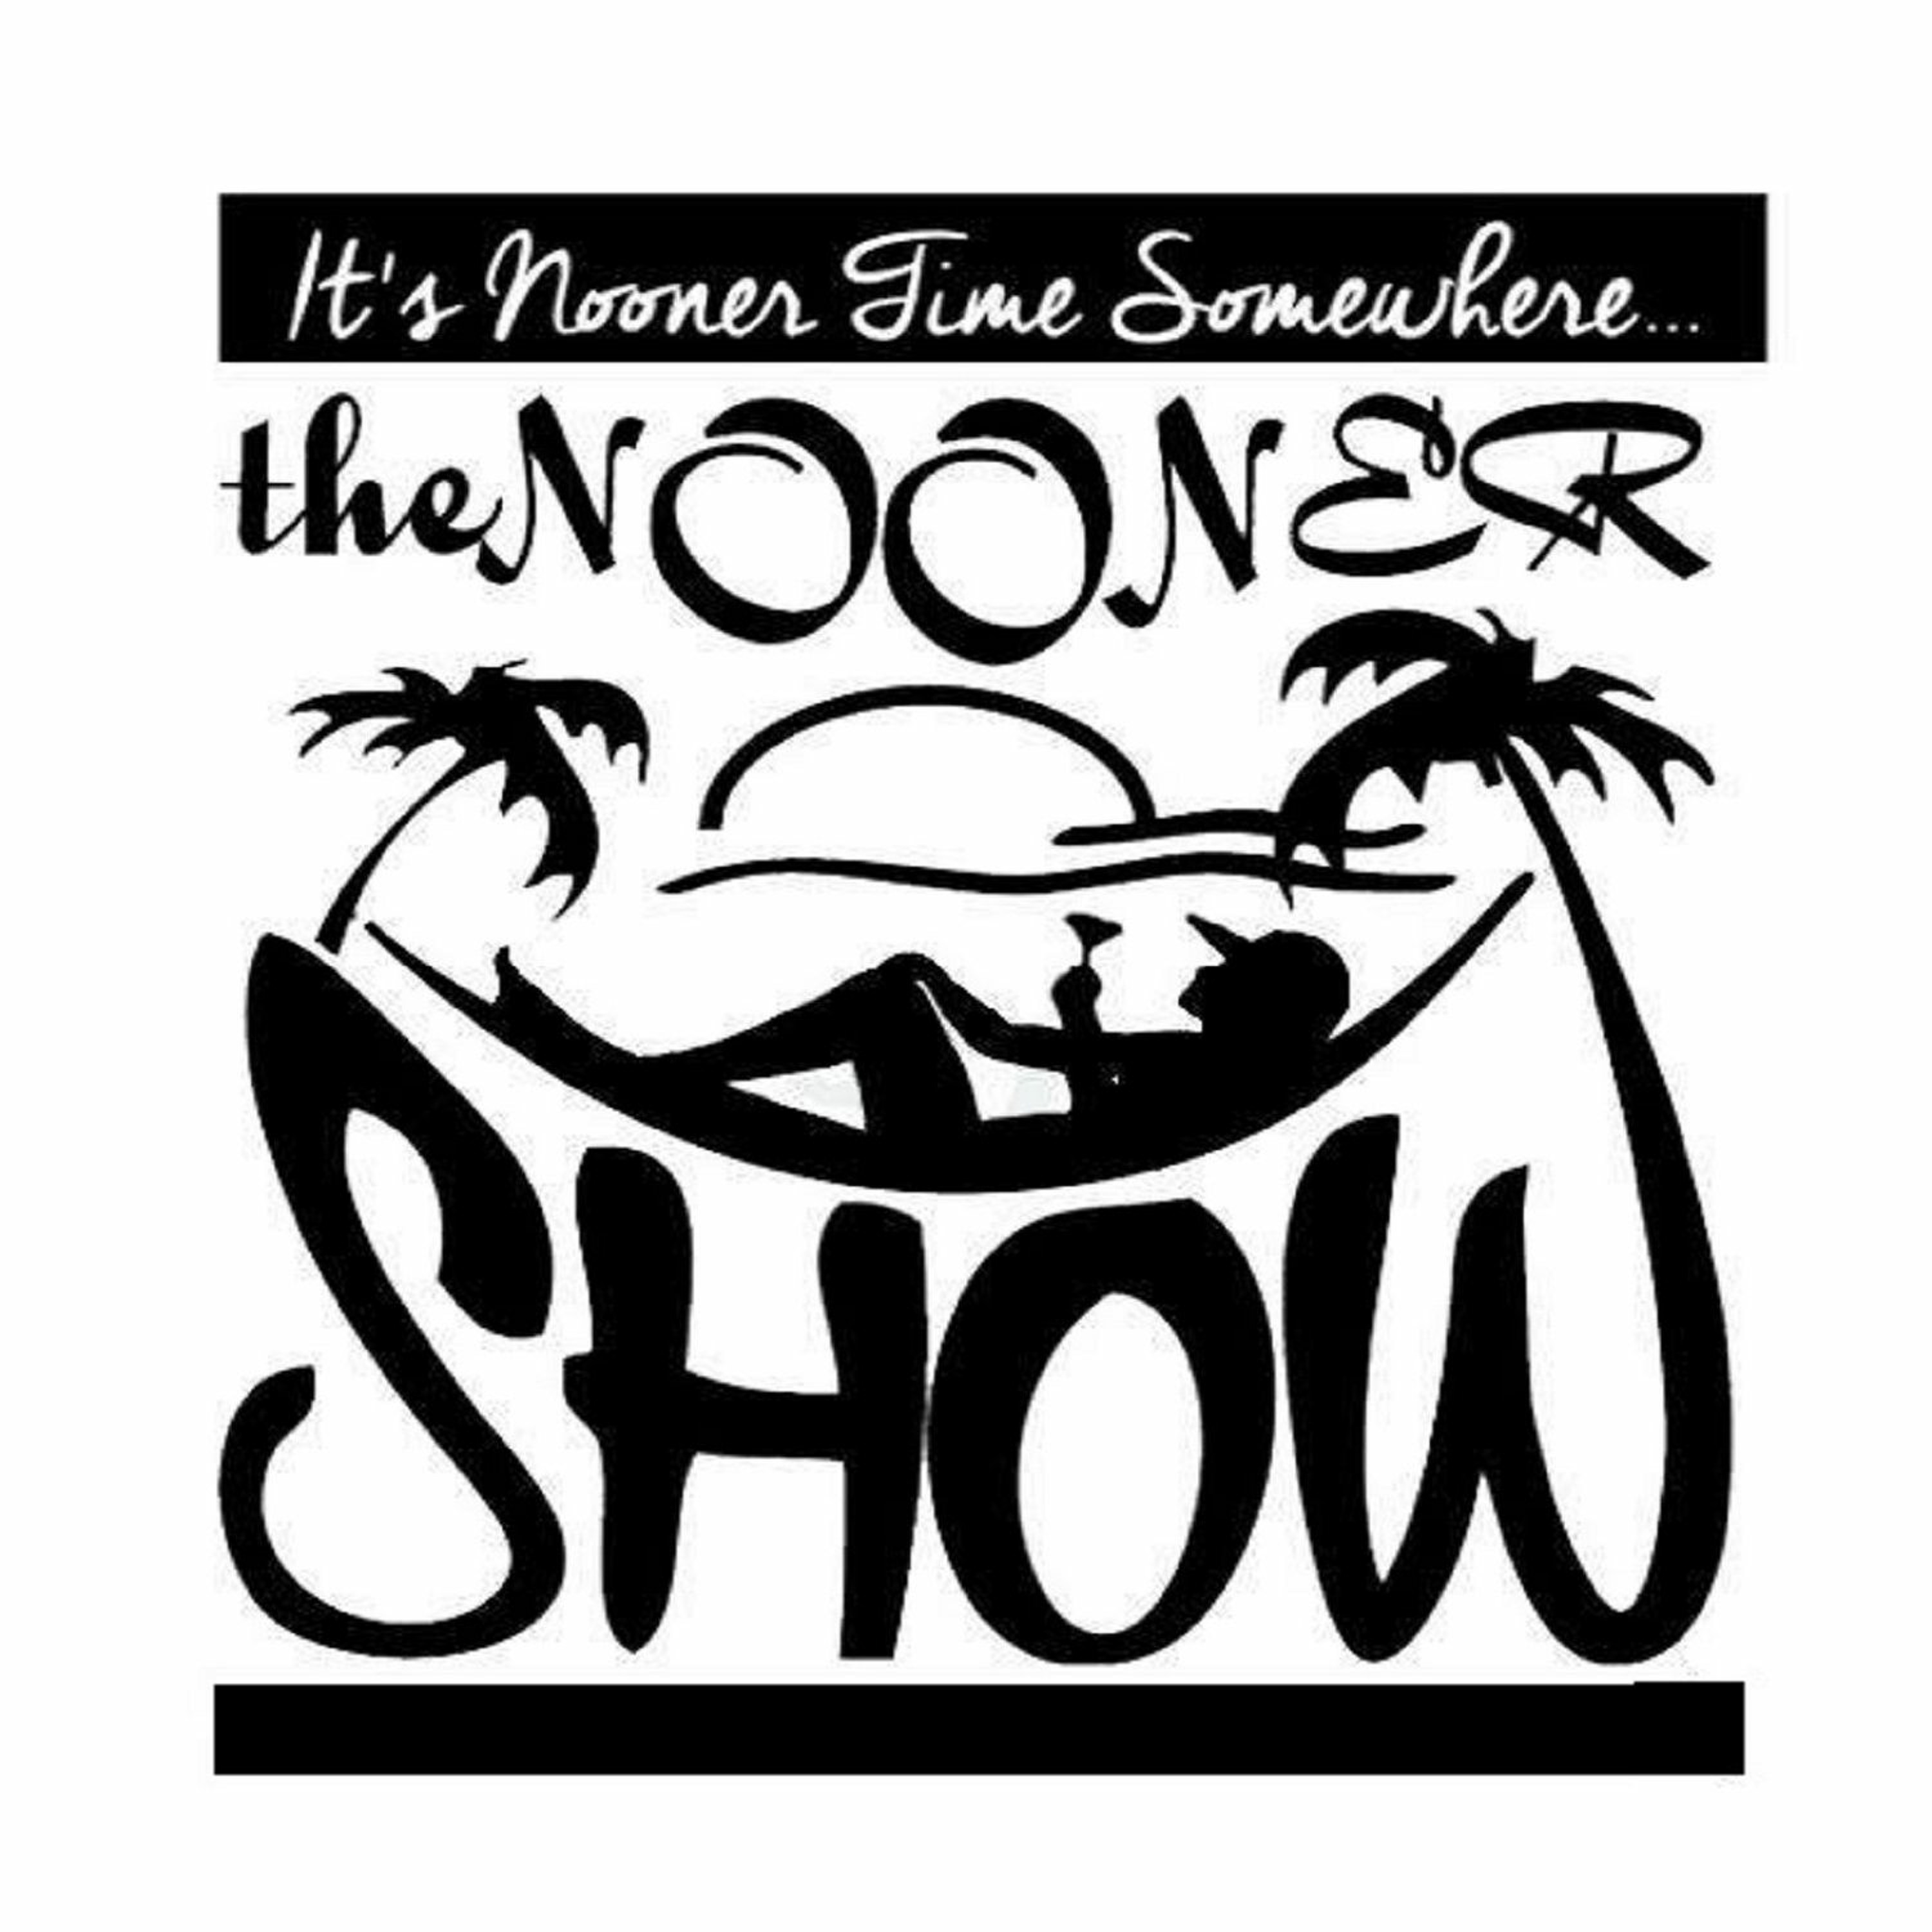 The Nooner Show - Episode 211